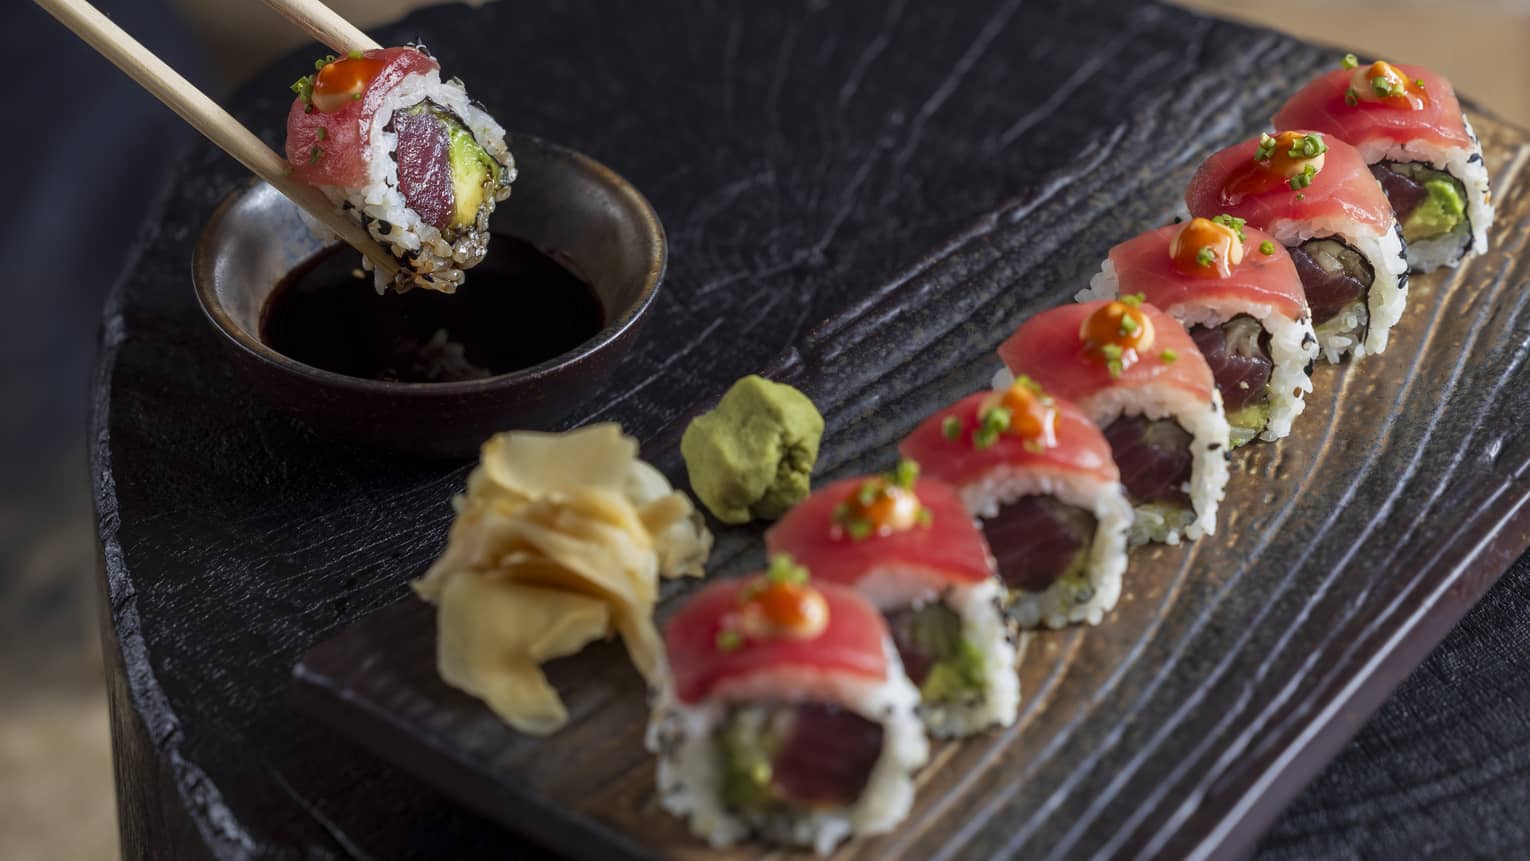 Yellowfin tuna sushi roll served on a black wood-grain platter